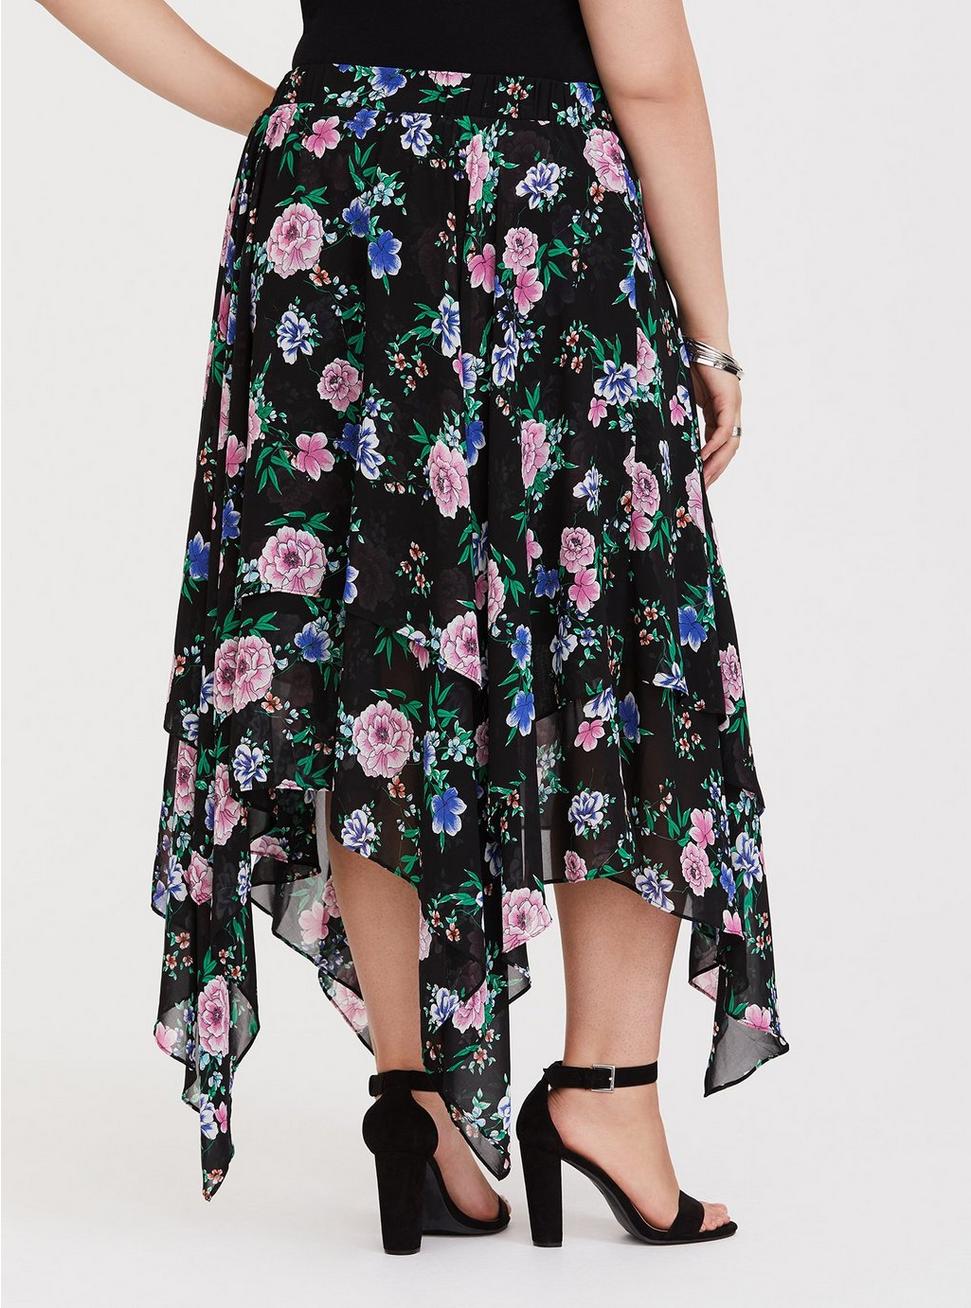 Plus Size - Black Floral Handkerchief Chiffon Skirt - Torrid